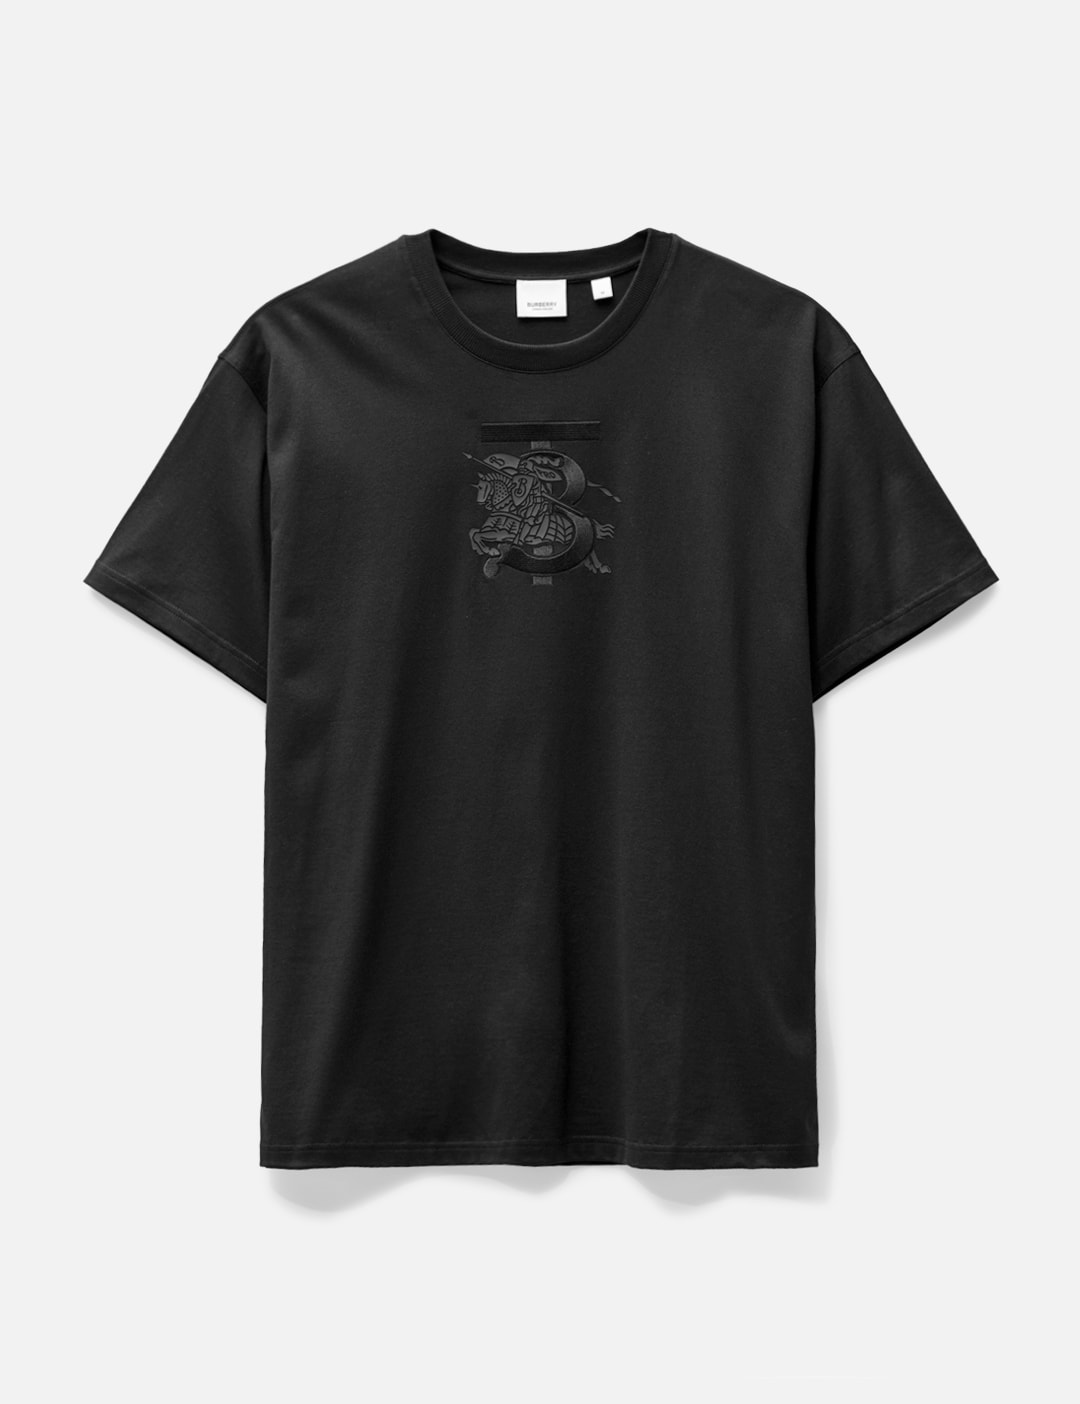 Burberry Men's Monogram Embroidered Shirt